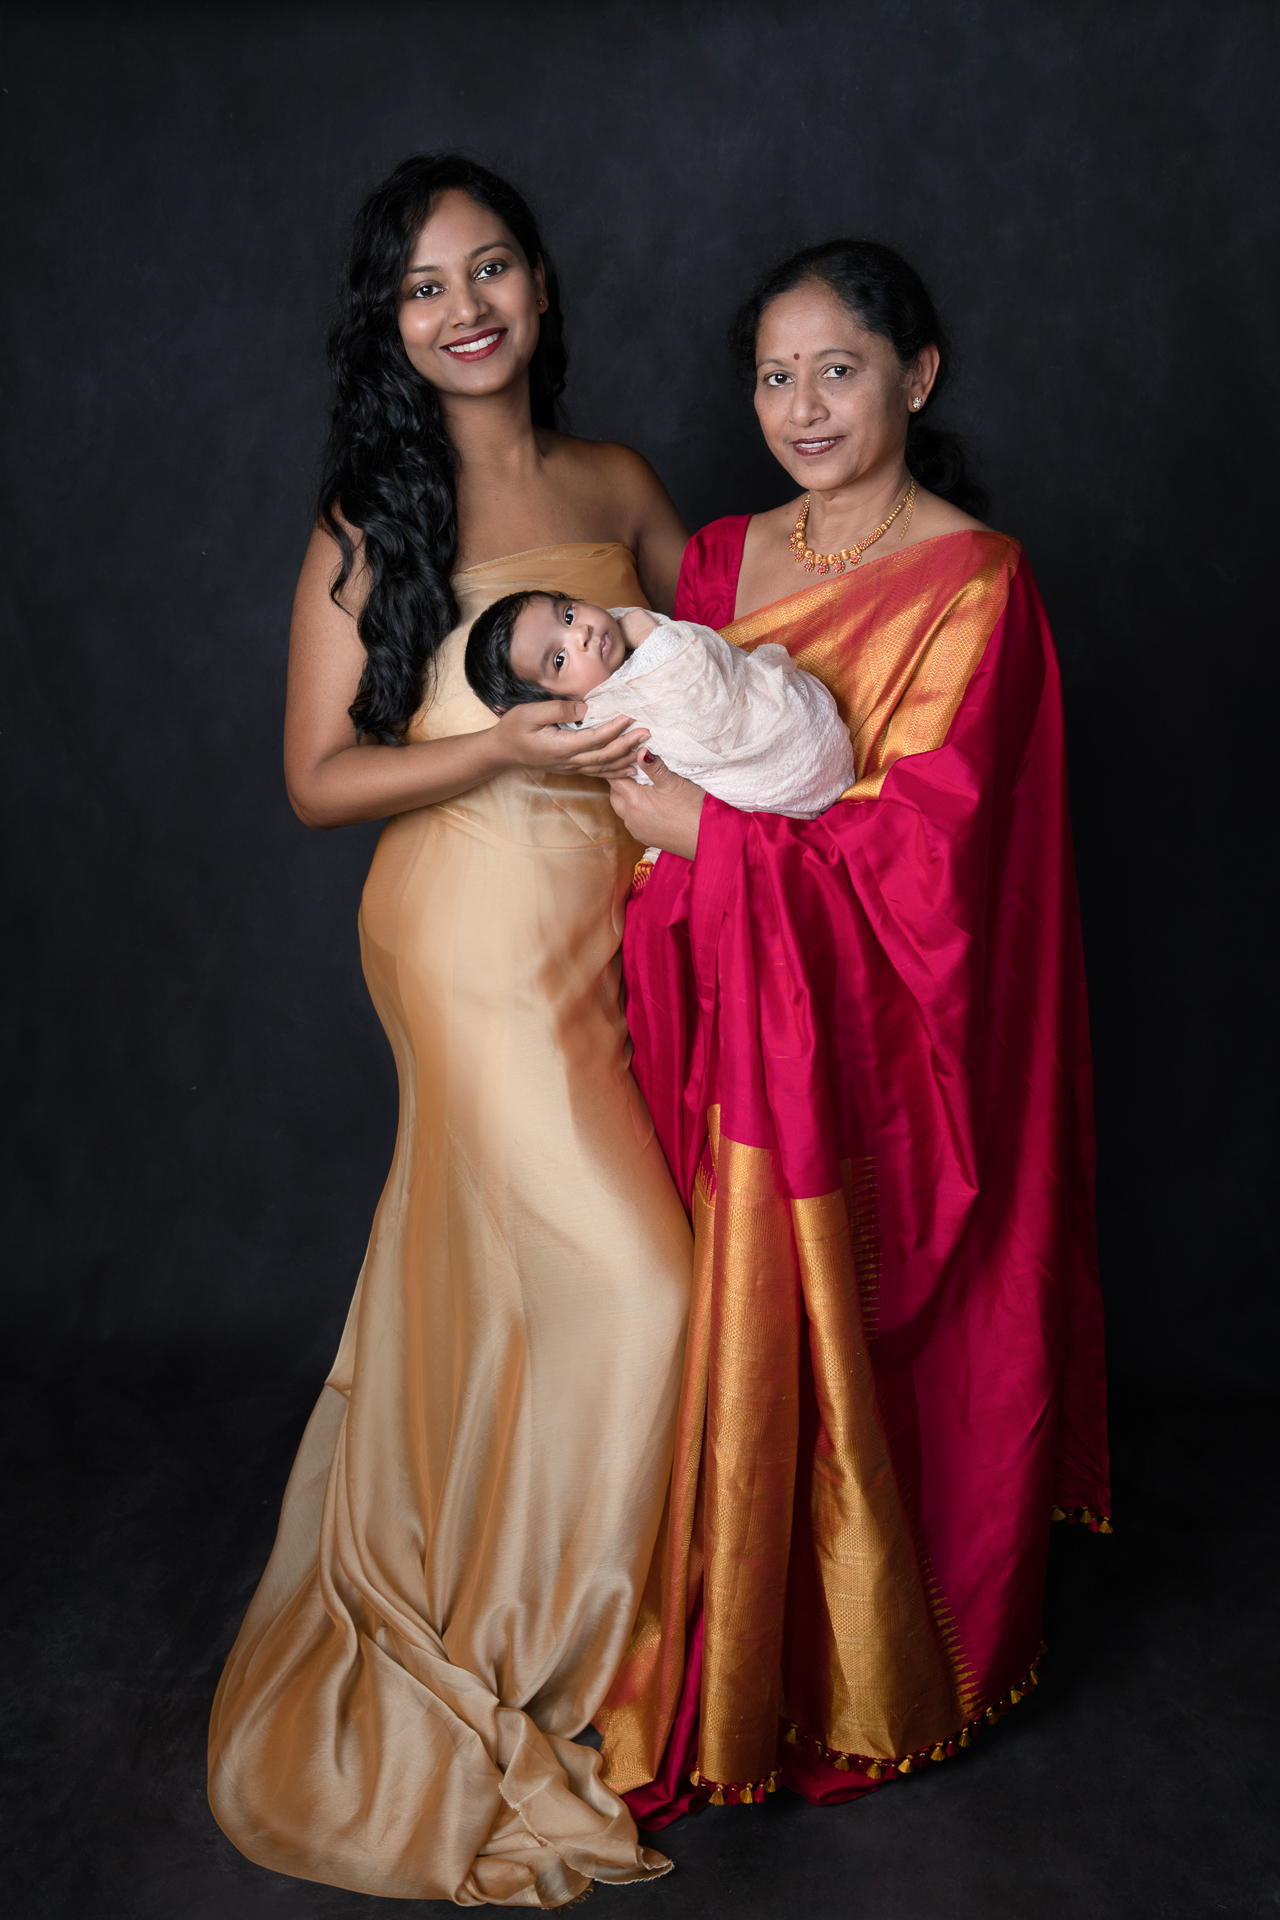 Grandmother, daughter and newborn girl posing indoor. Black backdrop. Grandmother wears sari. Mom on golden color dress. Baby on light color wrap.